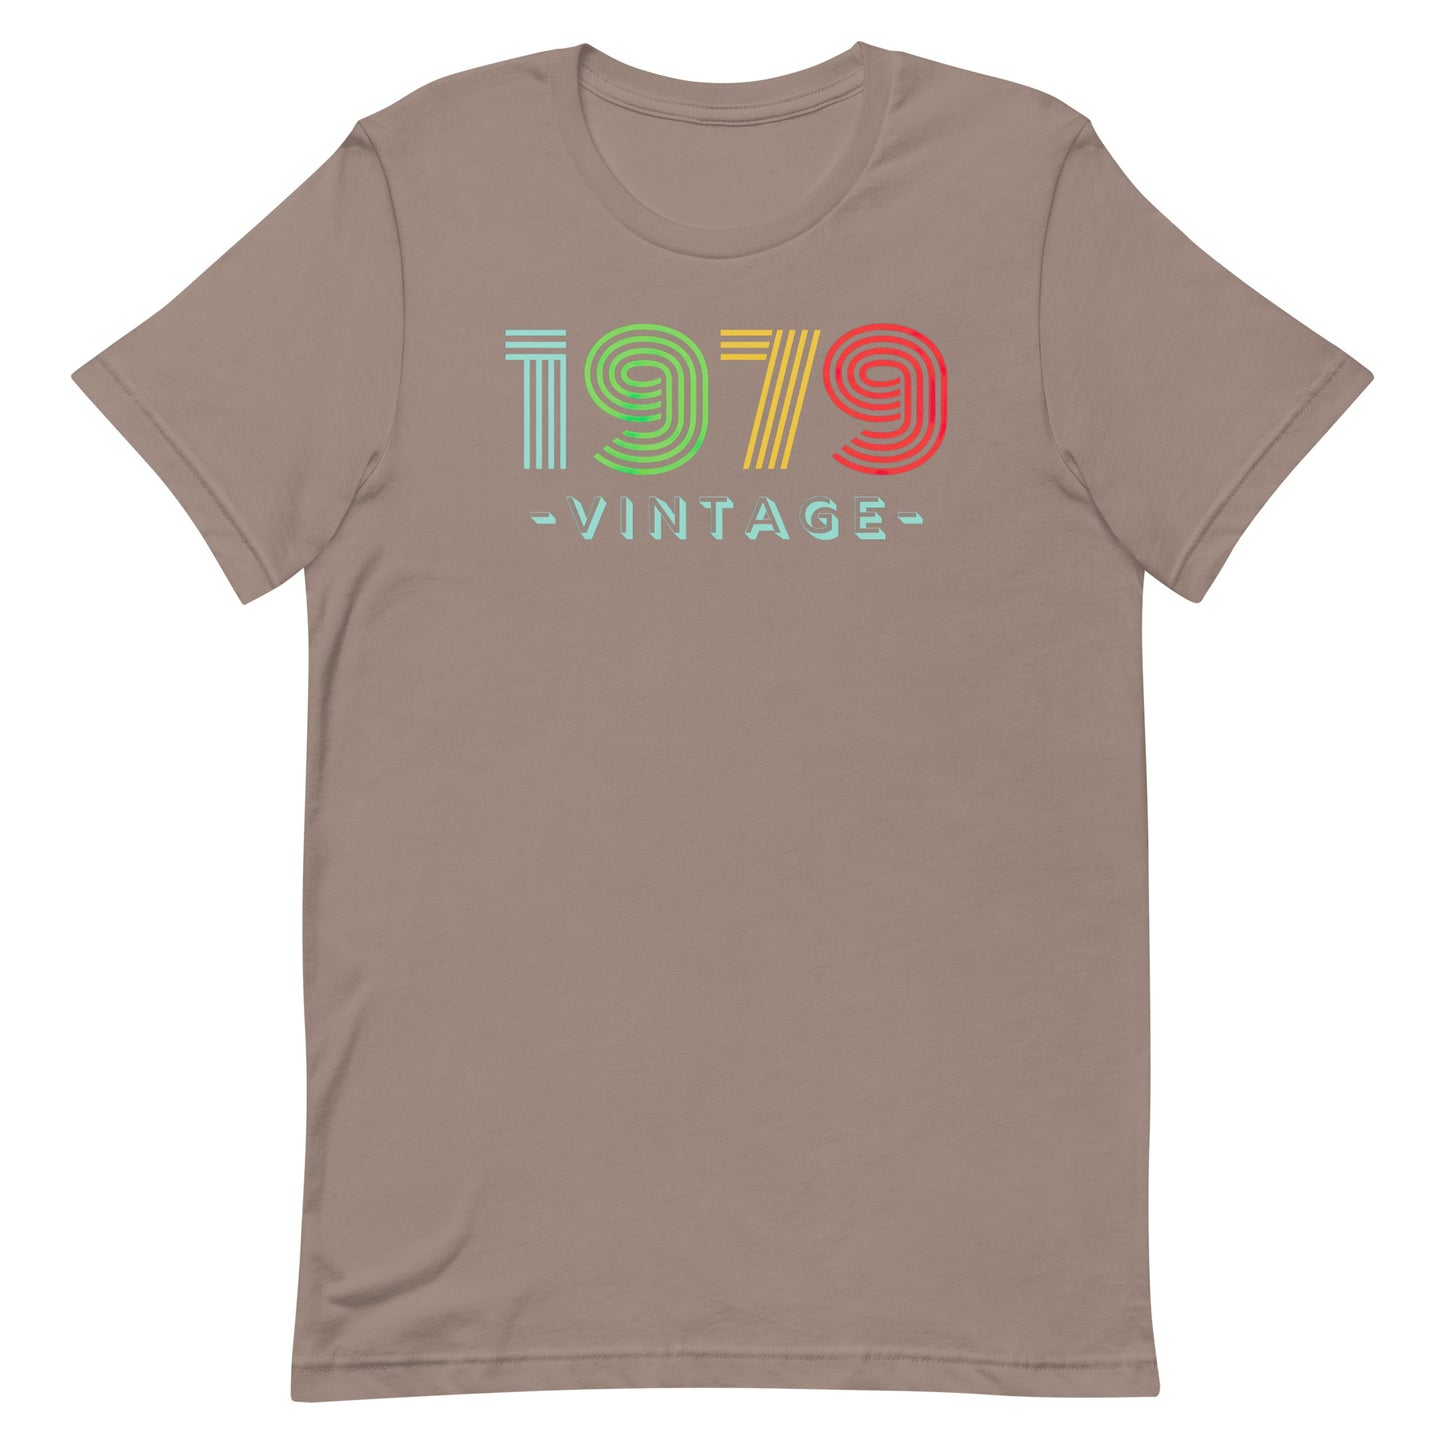 1979 Vintage. Unisex T-shirt